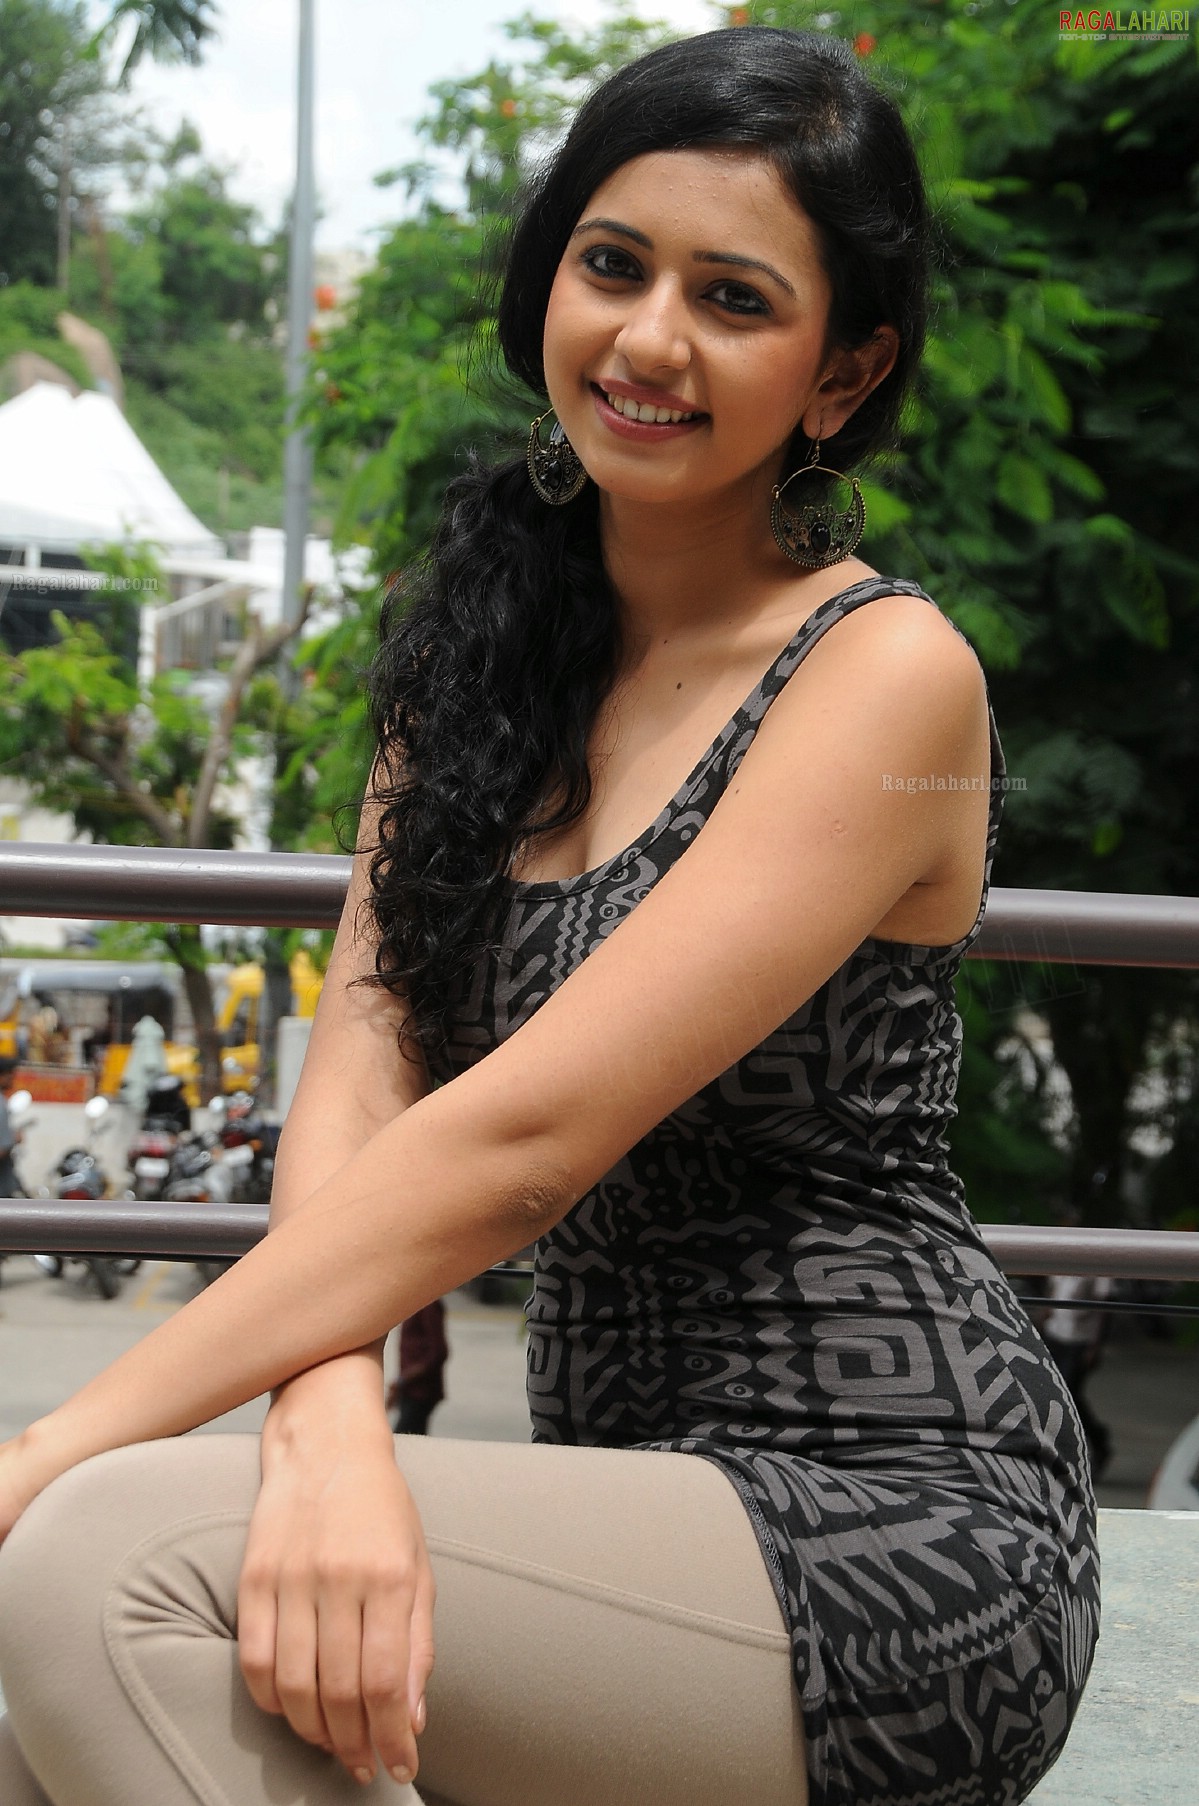 Rakul Preet Singh Femina Miss India 2011 Contestant - High Resolution Photo Gallery